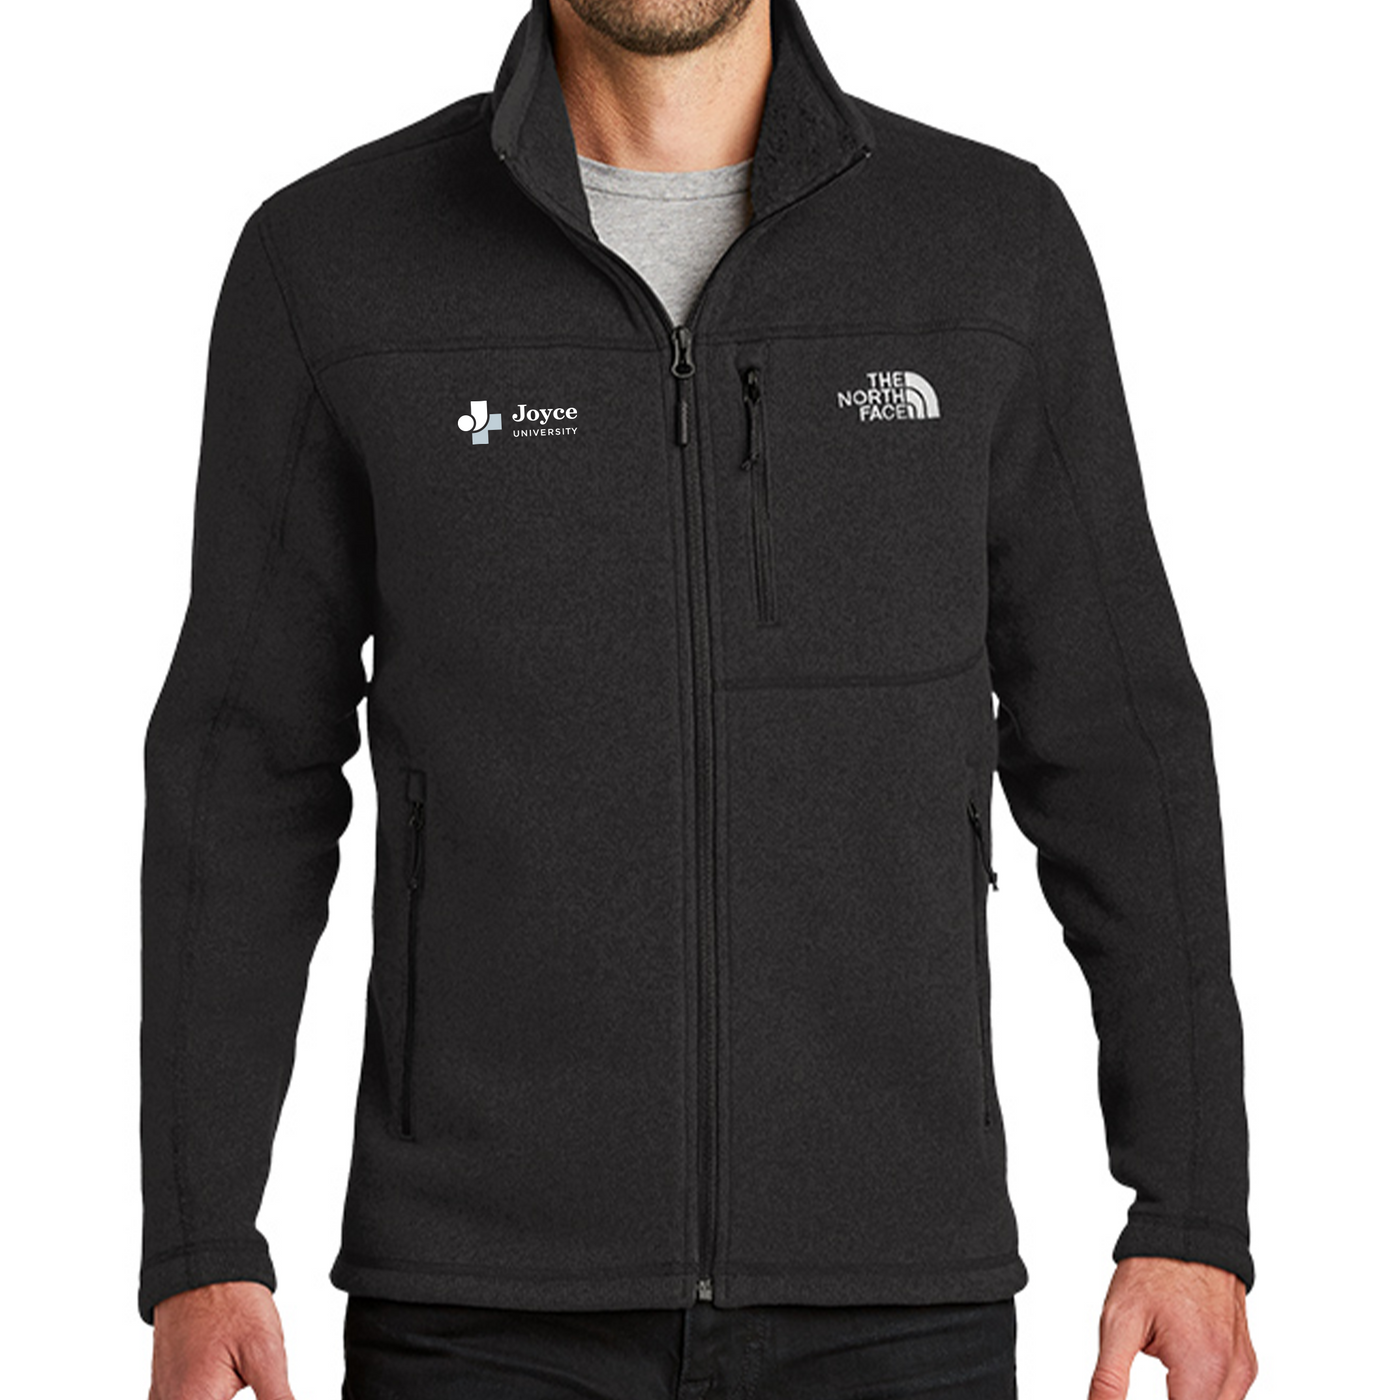 The North Face® Sweater Fleece Jacket – Joyce University